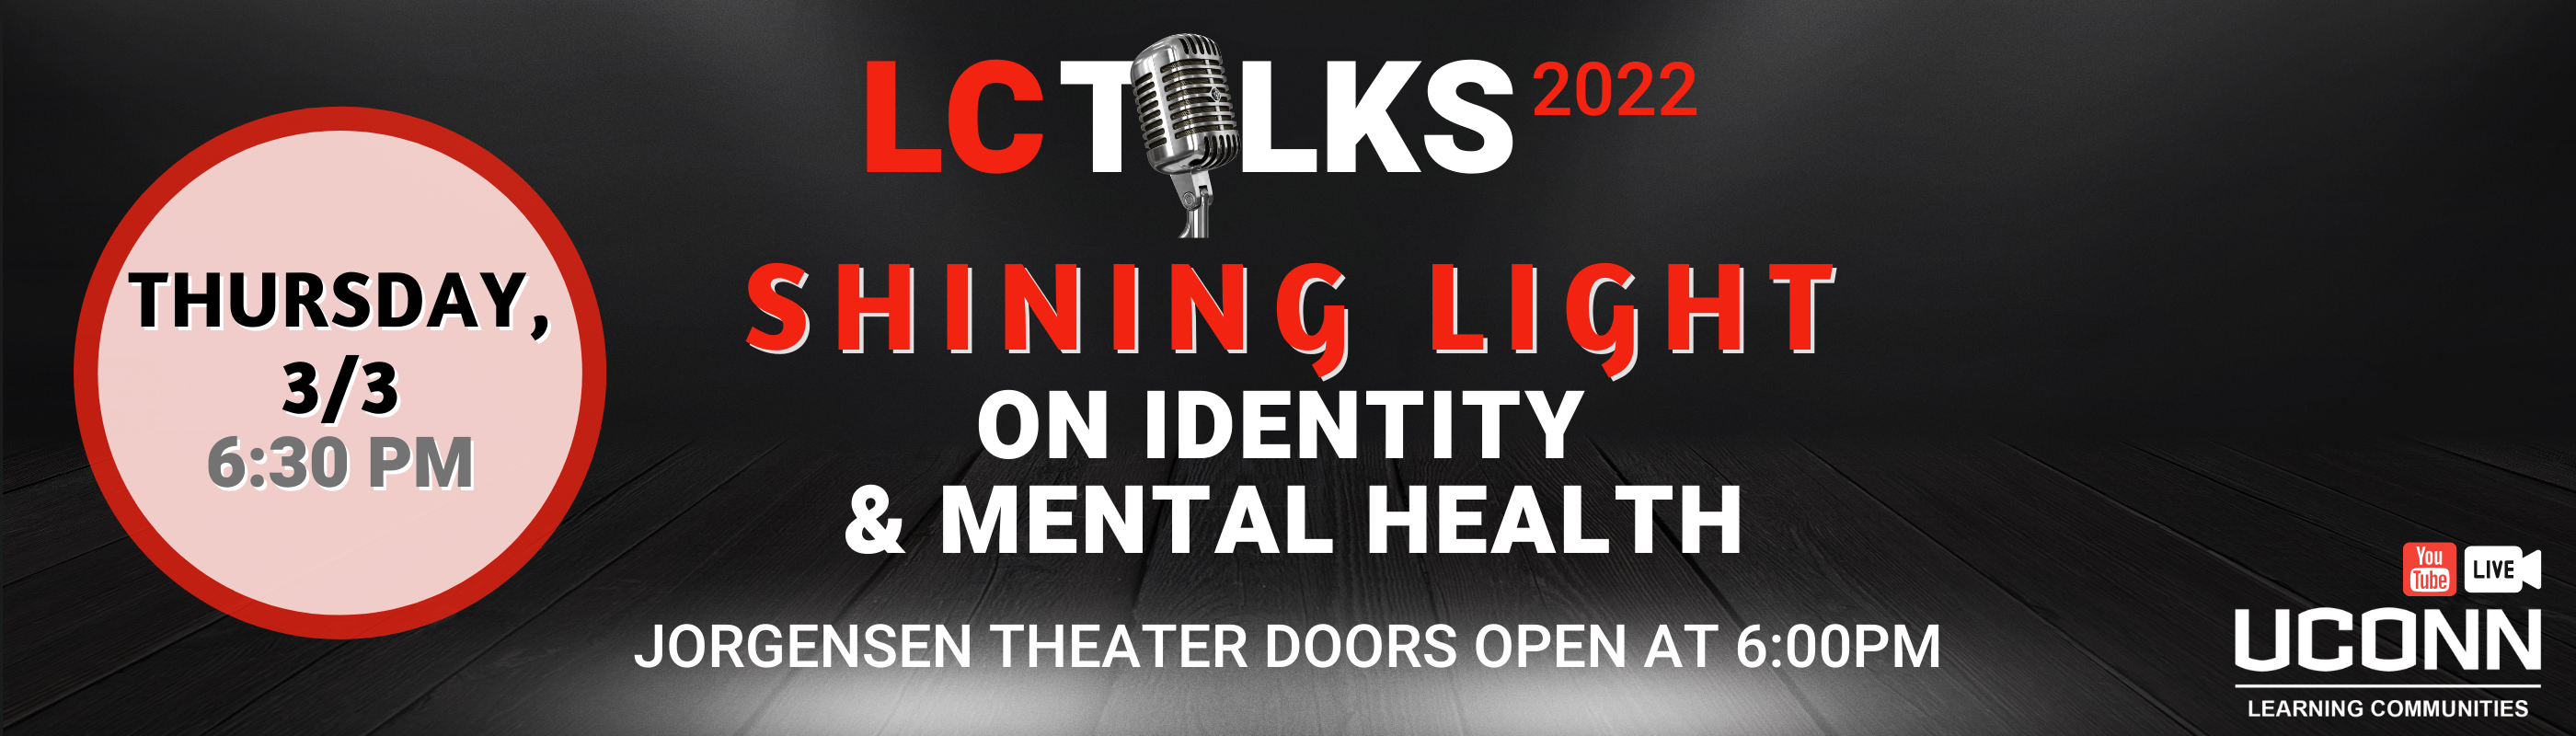 LC TALKS 2022 Shining Light on Identity & Mental Health Thursday 3-3 6 30 pm Jorgensen Theatre and YouTube Live